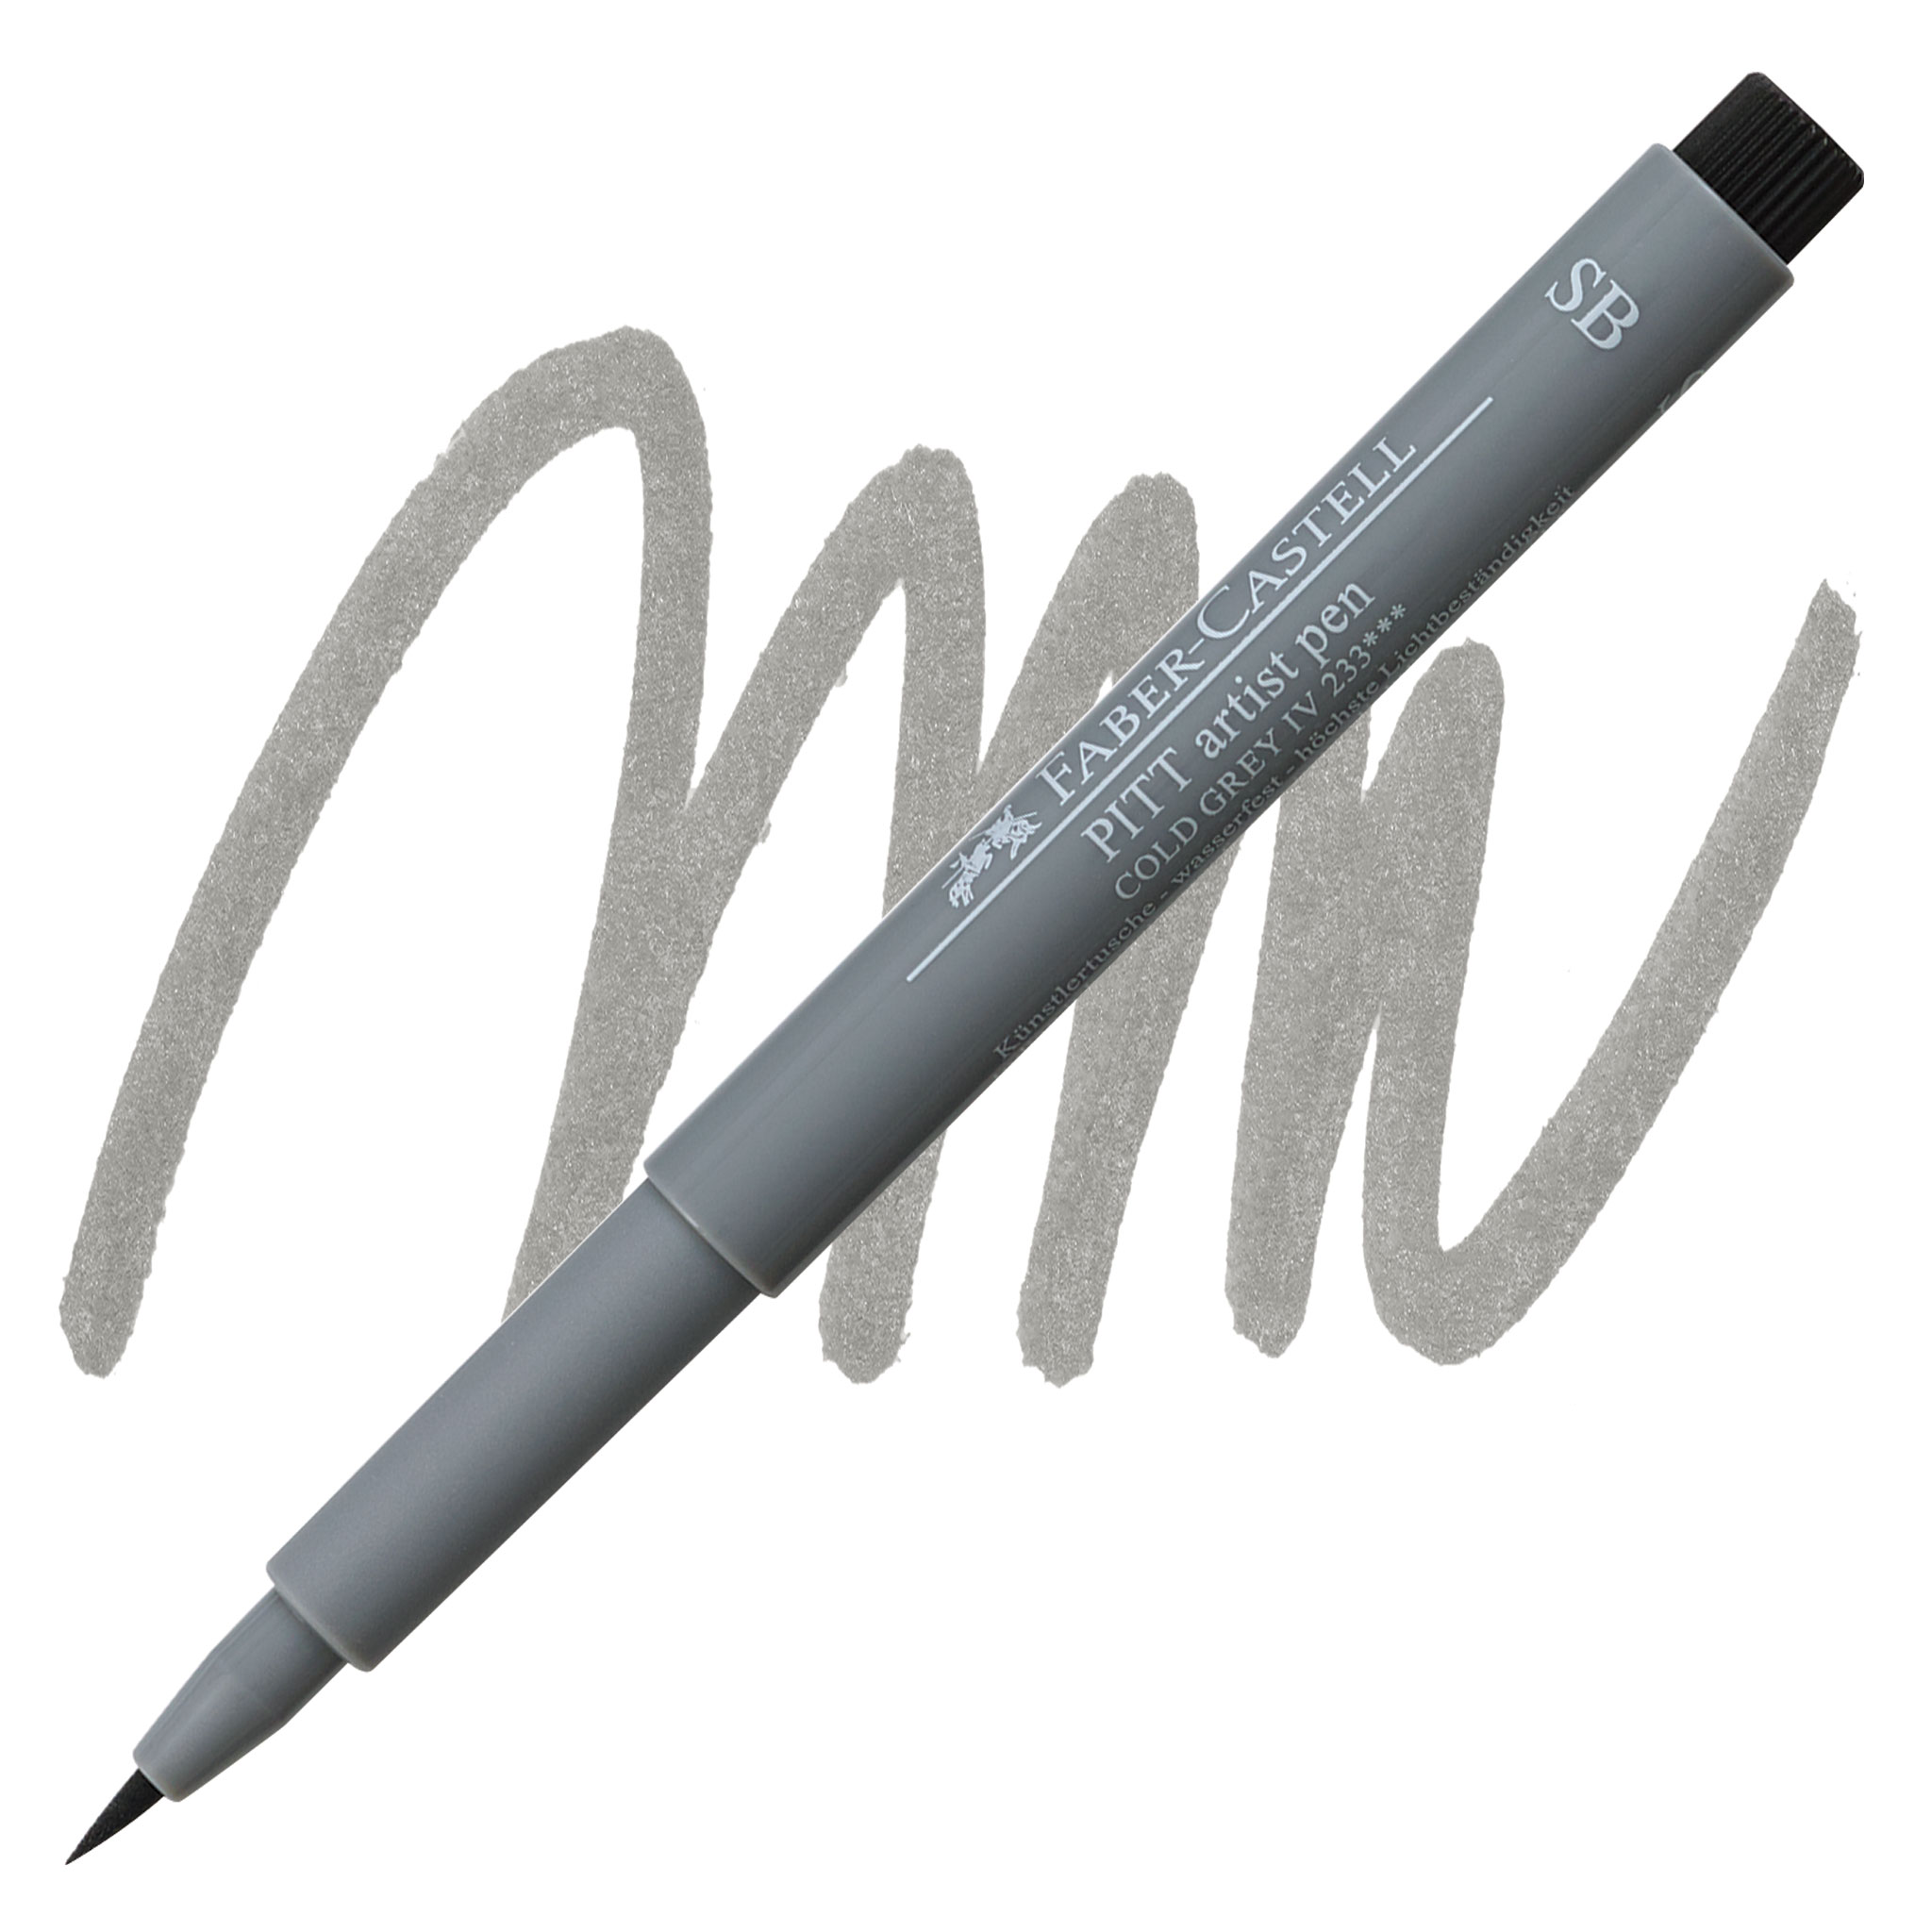 Faber Castell PITT Artist Pen Soft Brush, Set of 8, Shades of Grey